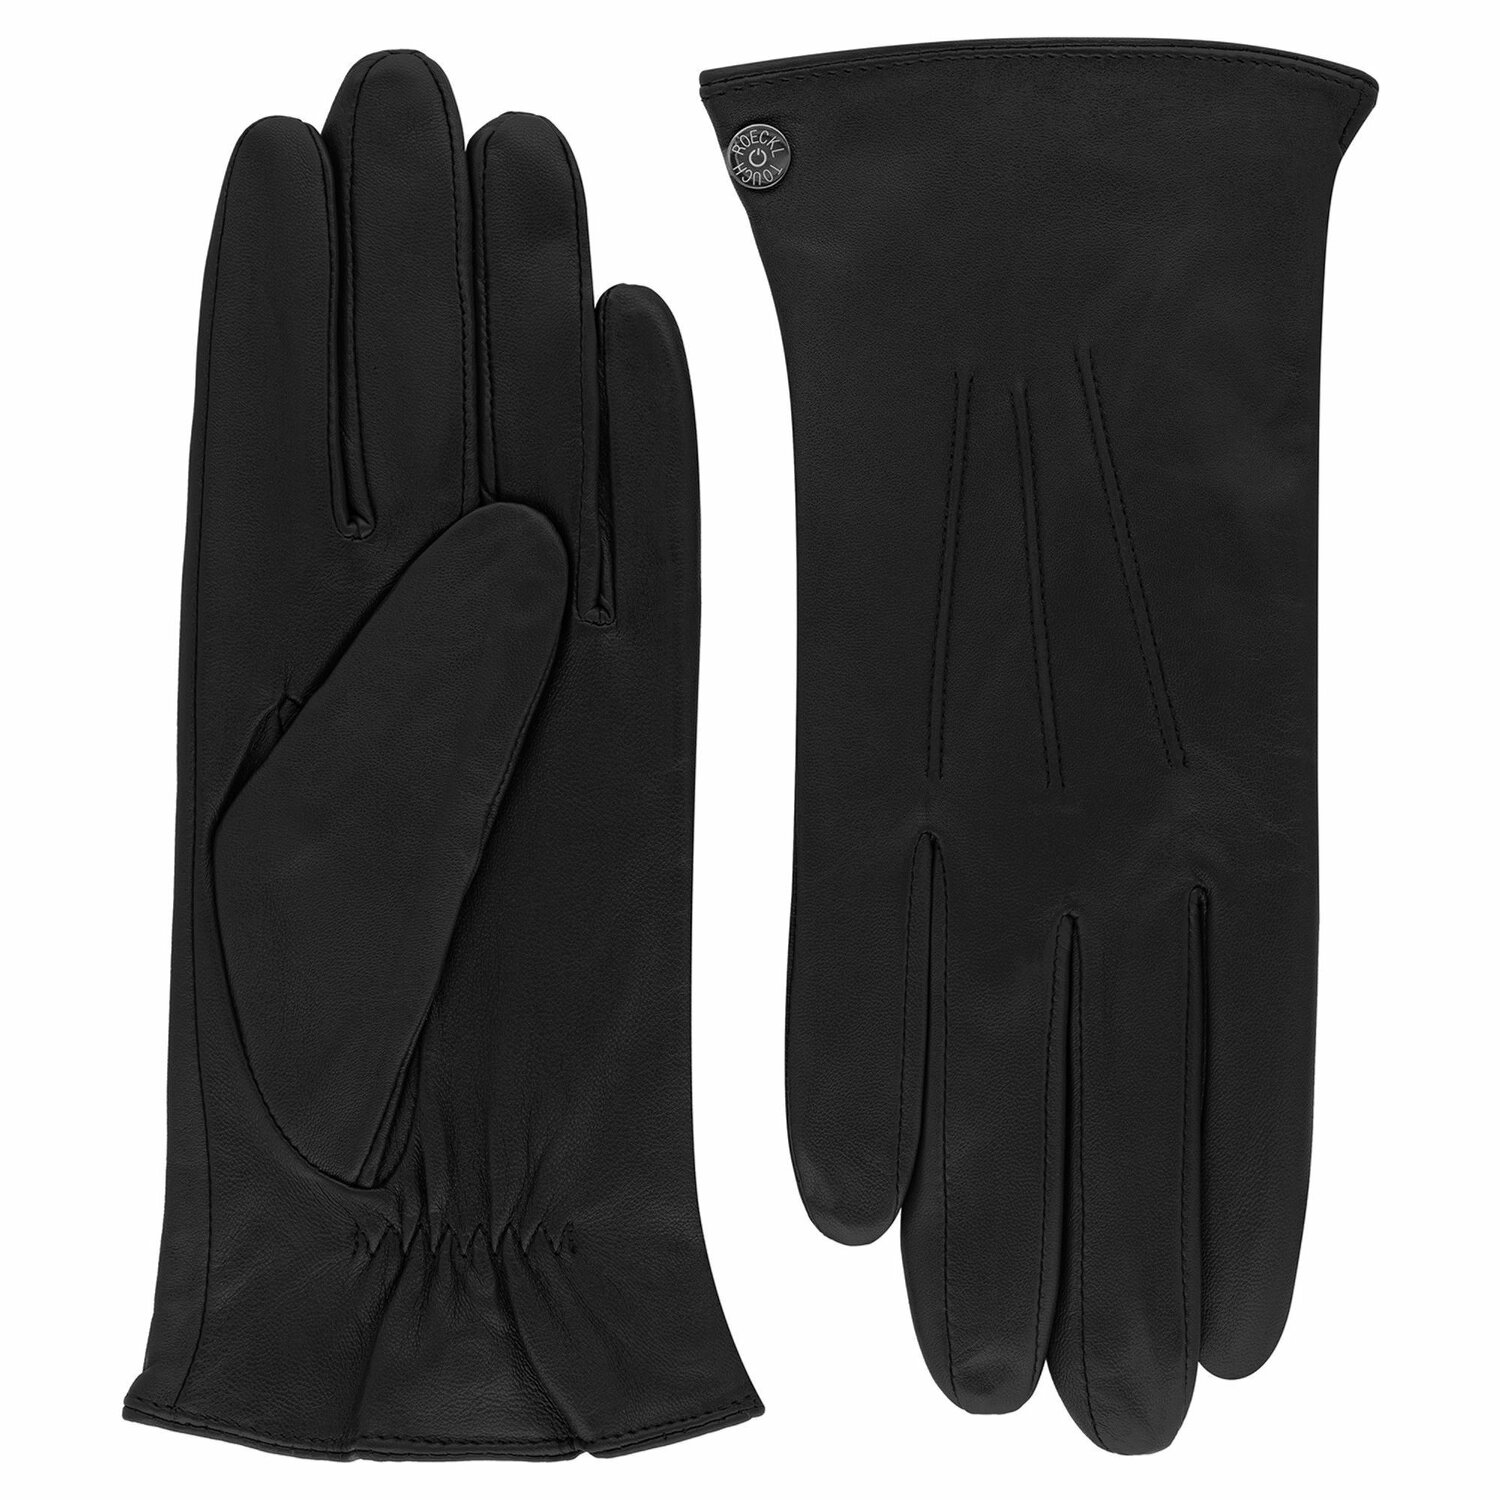 Black, Roeckl Milas Gloves